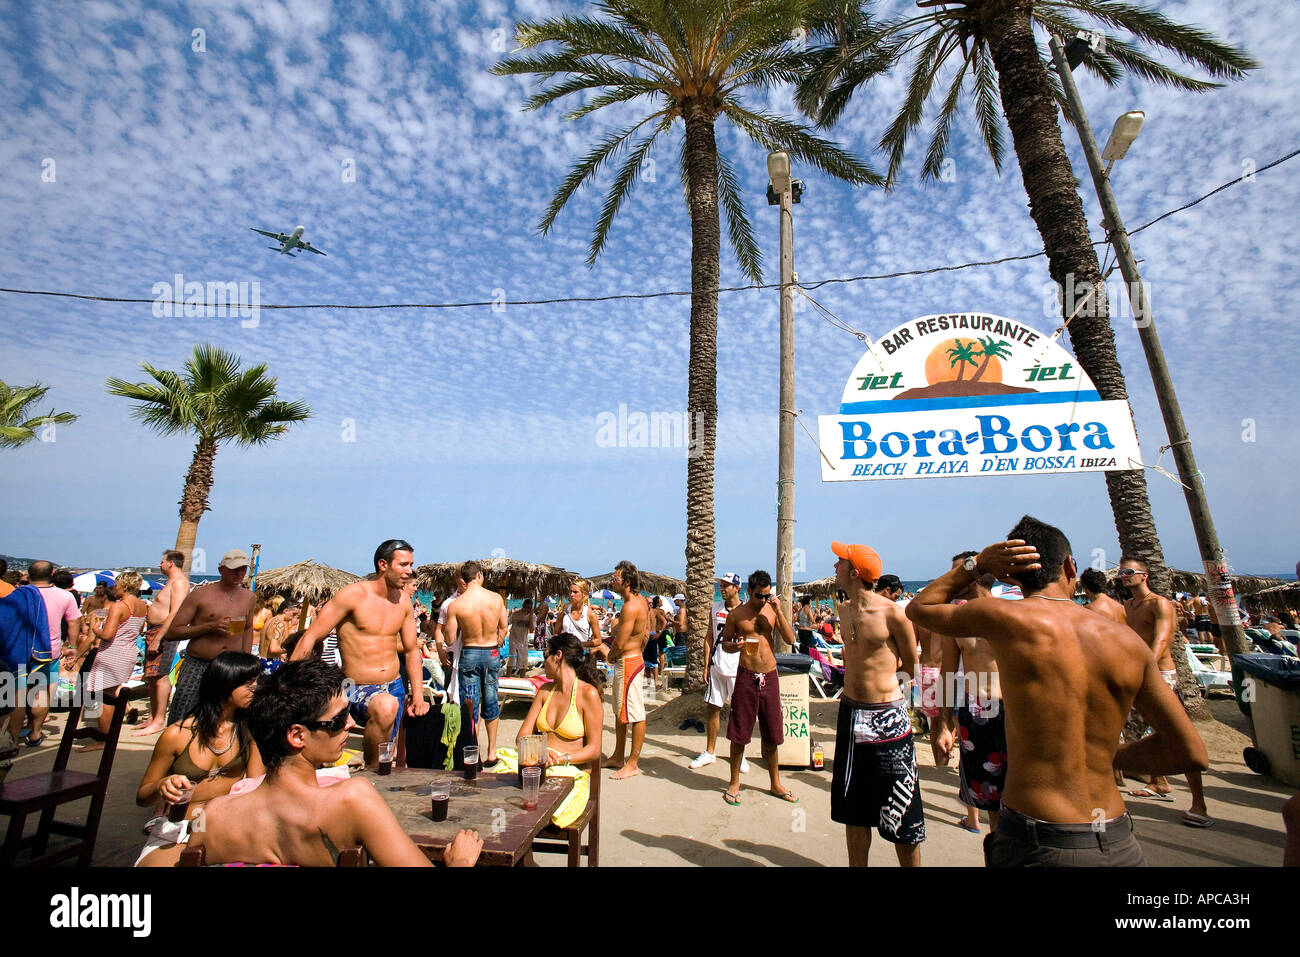 Bora-Bora, Playa d'en Bossa, Ibiza, the Balearic Islands, Spain Stock Photo